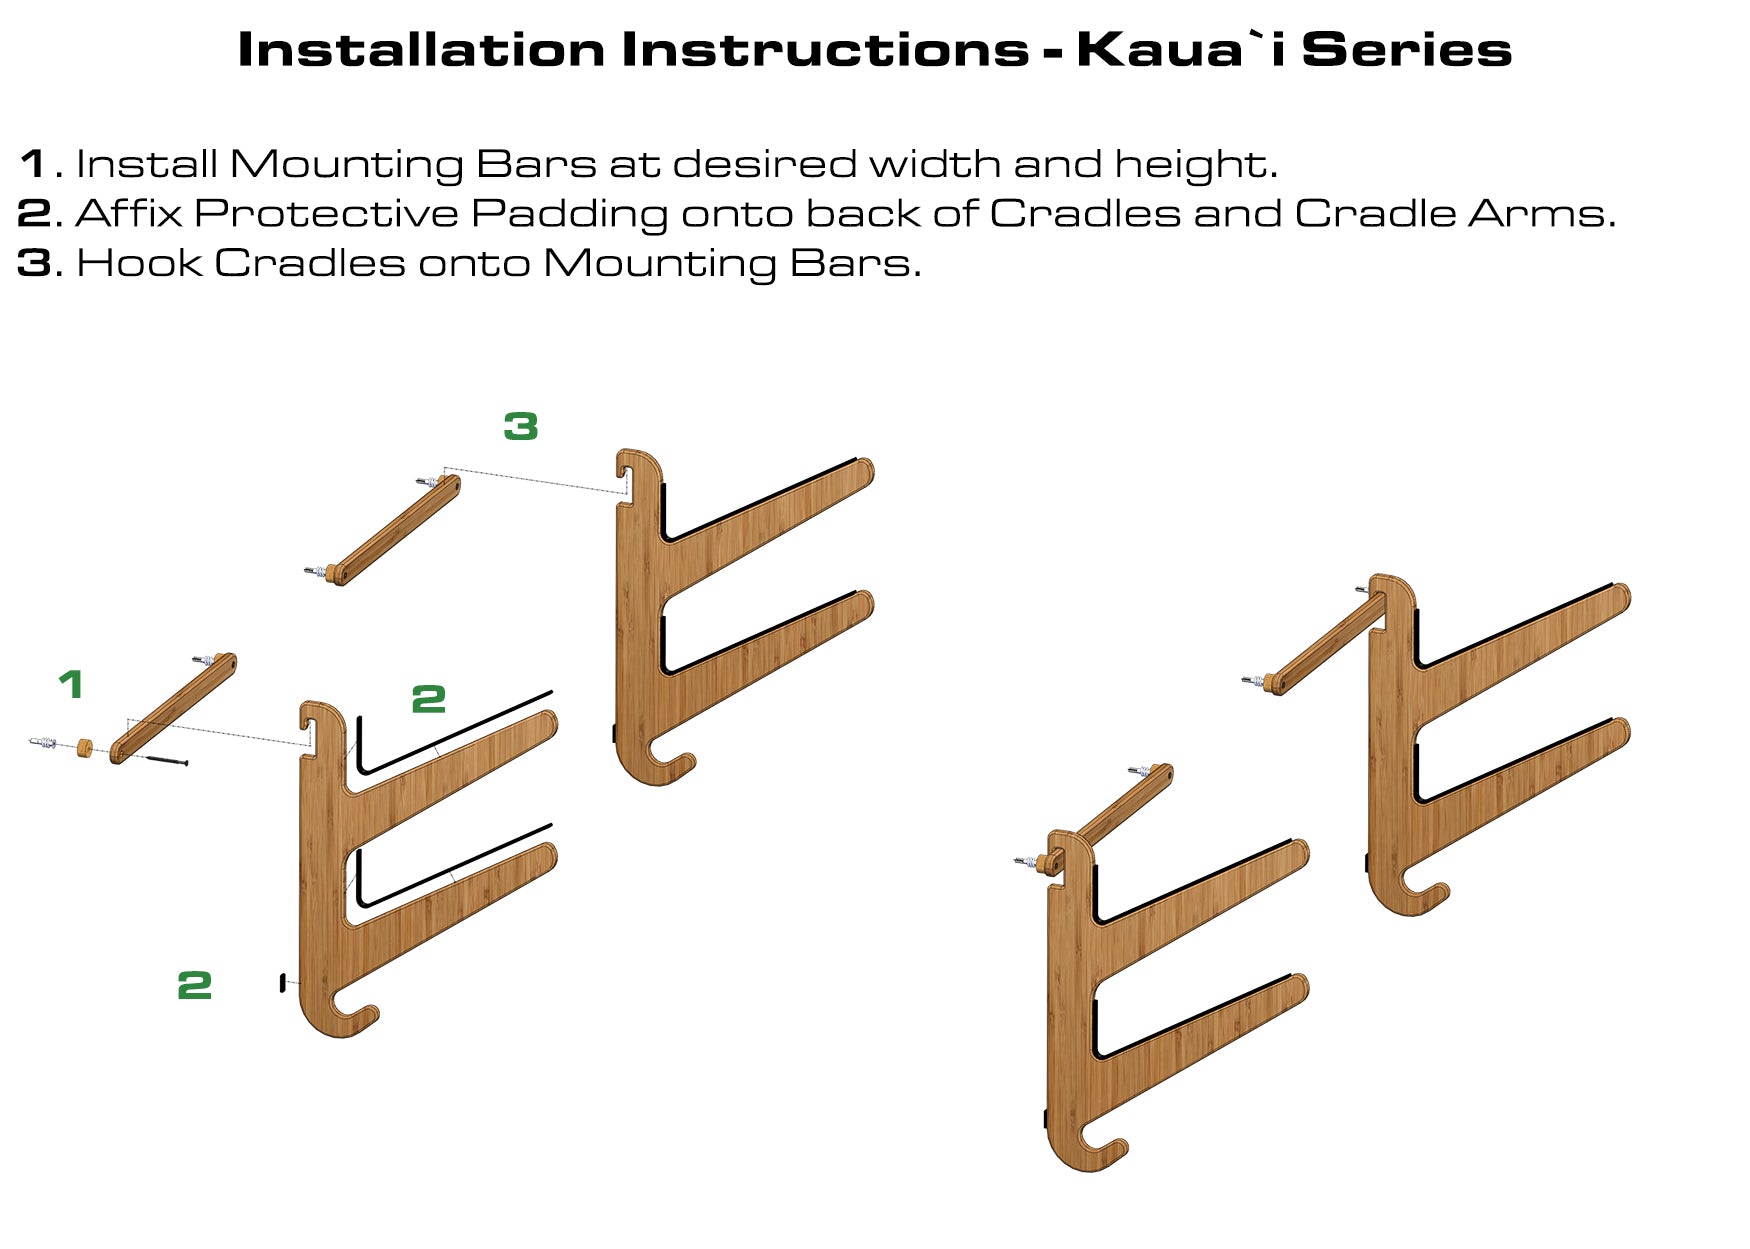 Surfboard Rack Installation Instructions - Grassracks Kaua'i Surfboard Rack